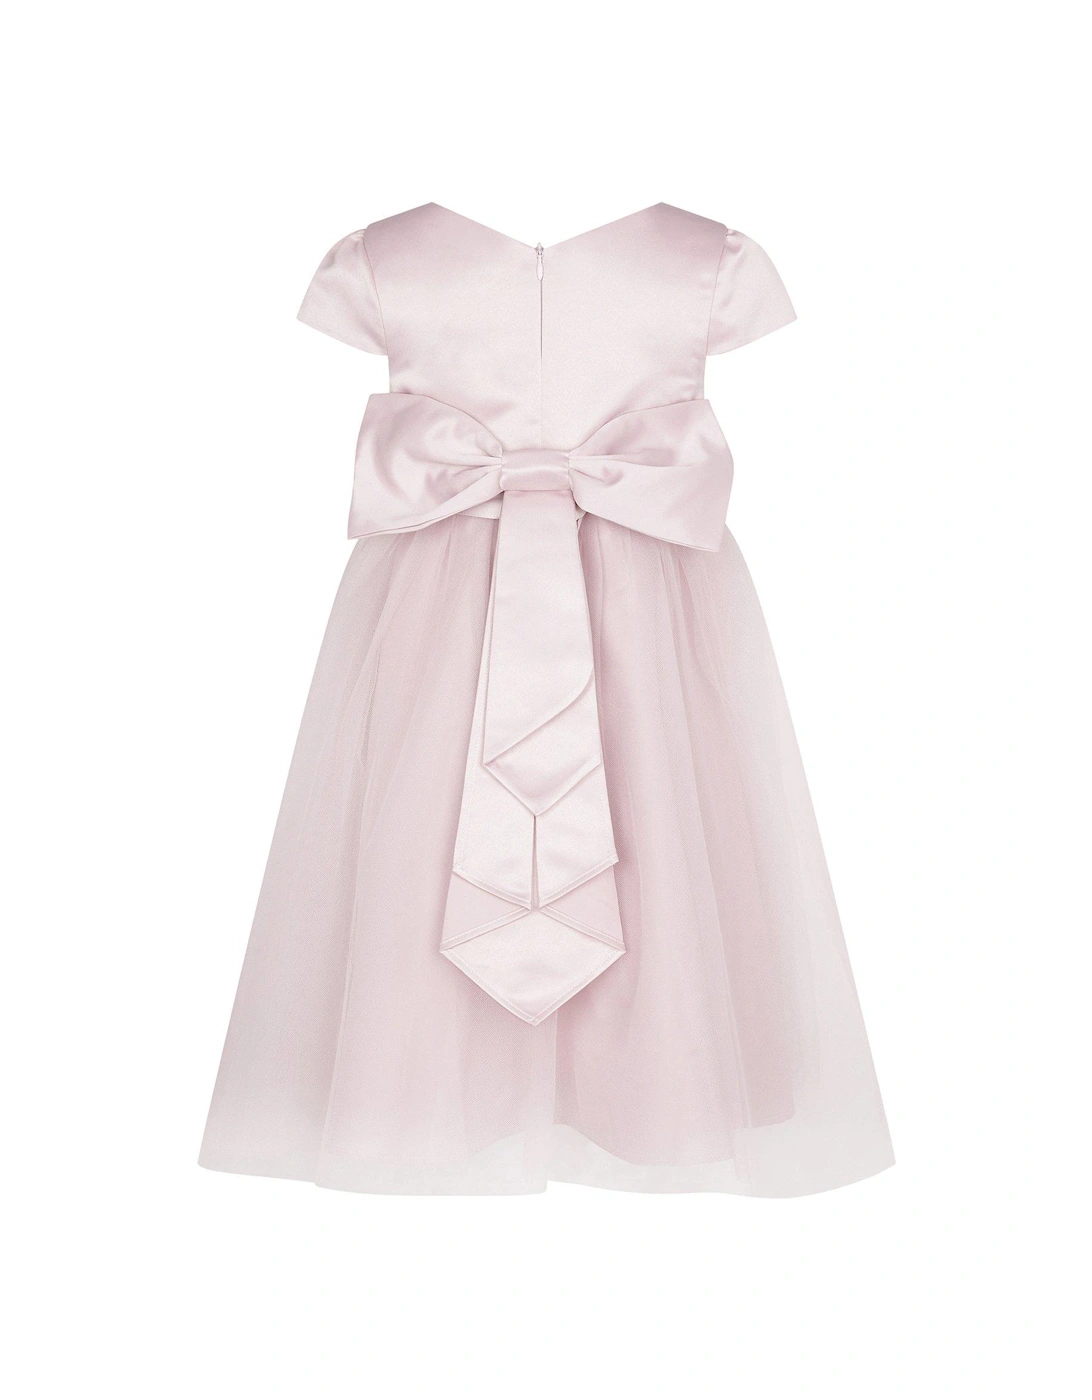 Girls Tulle Bridesmaid Dress - Pink